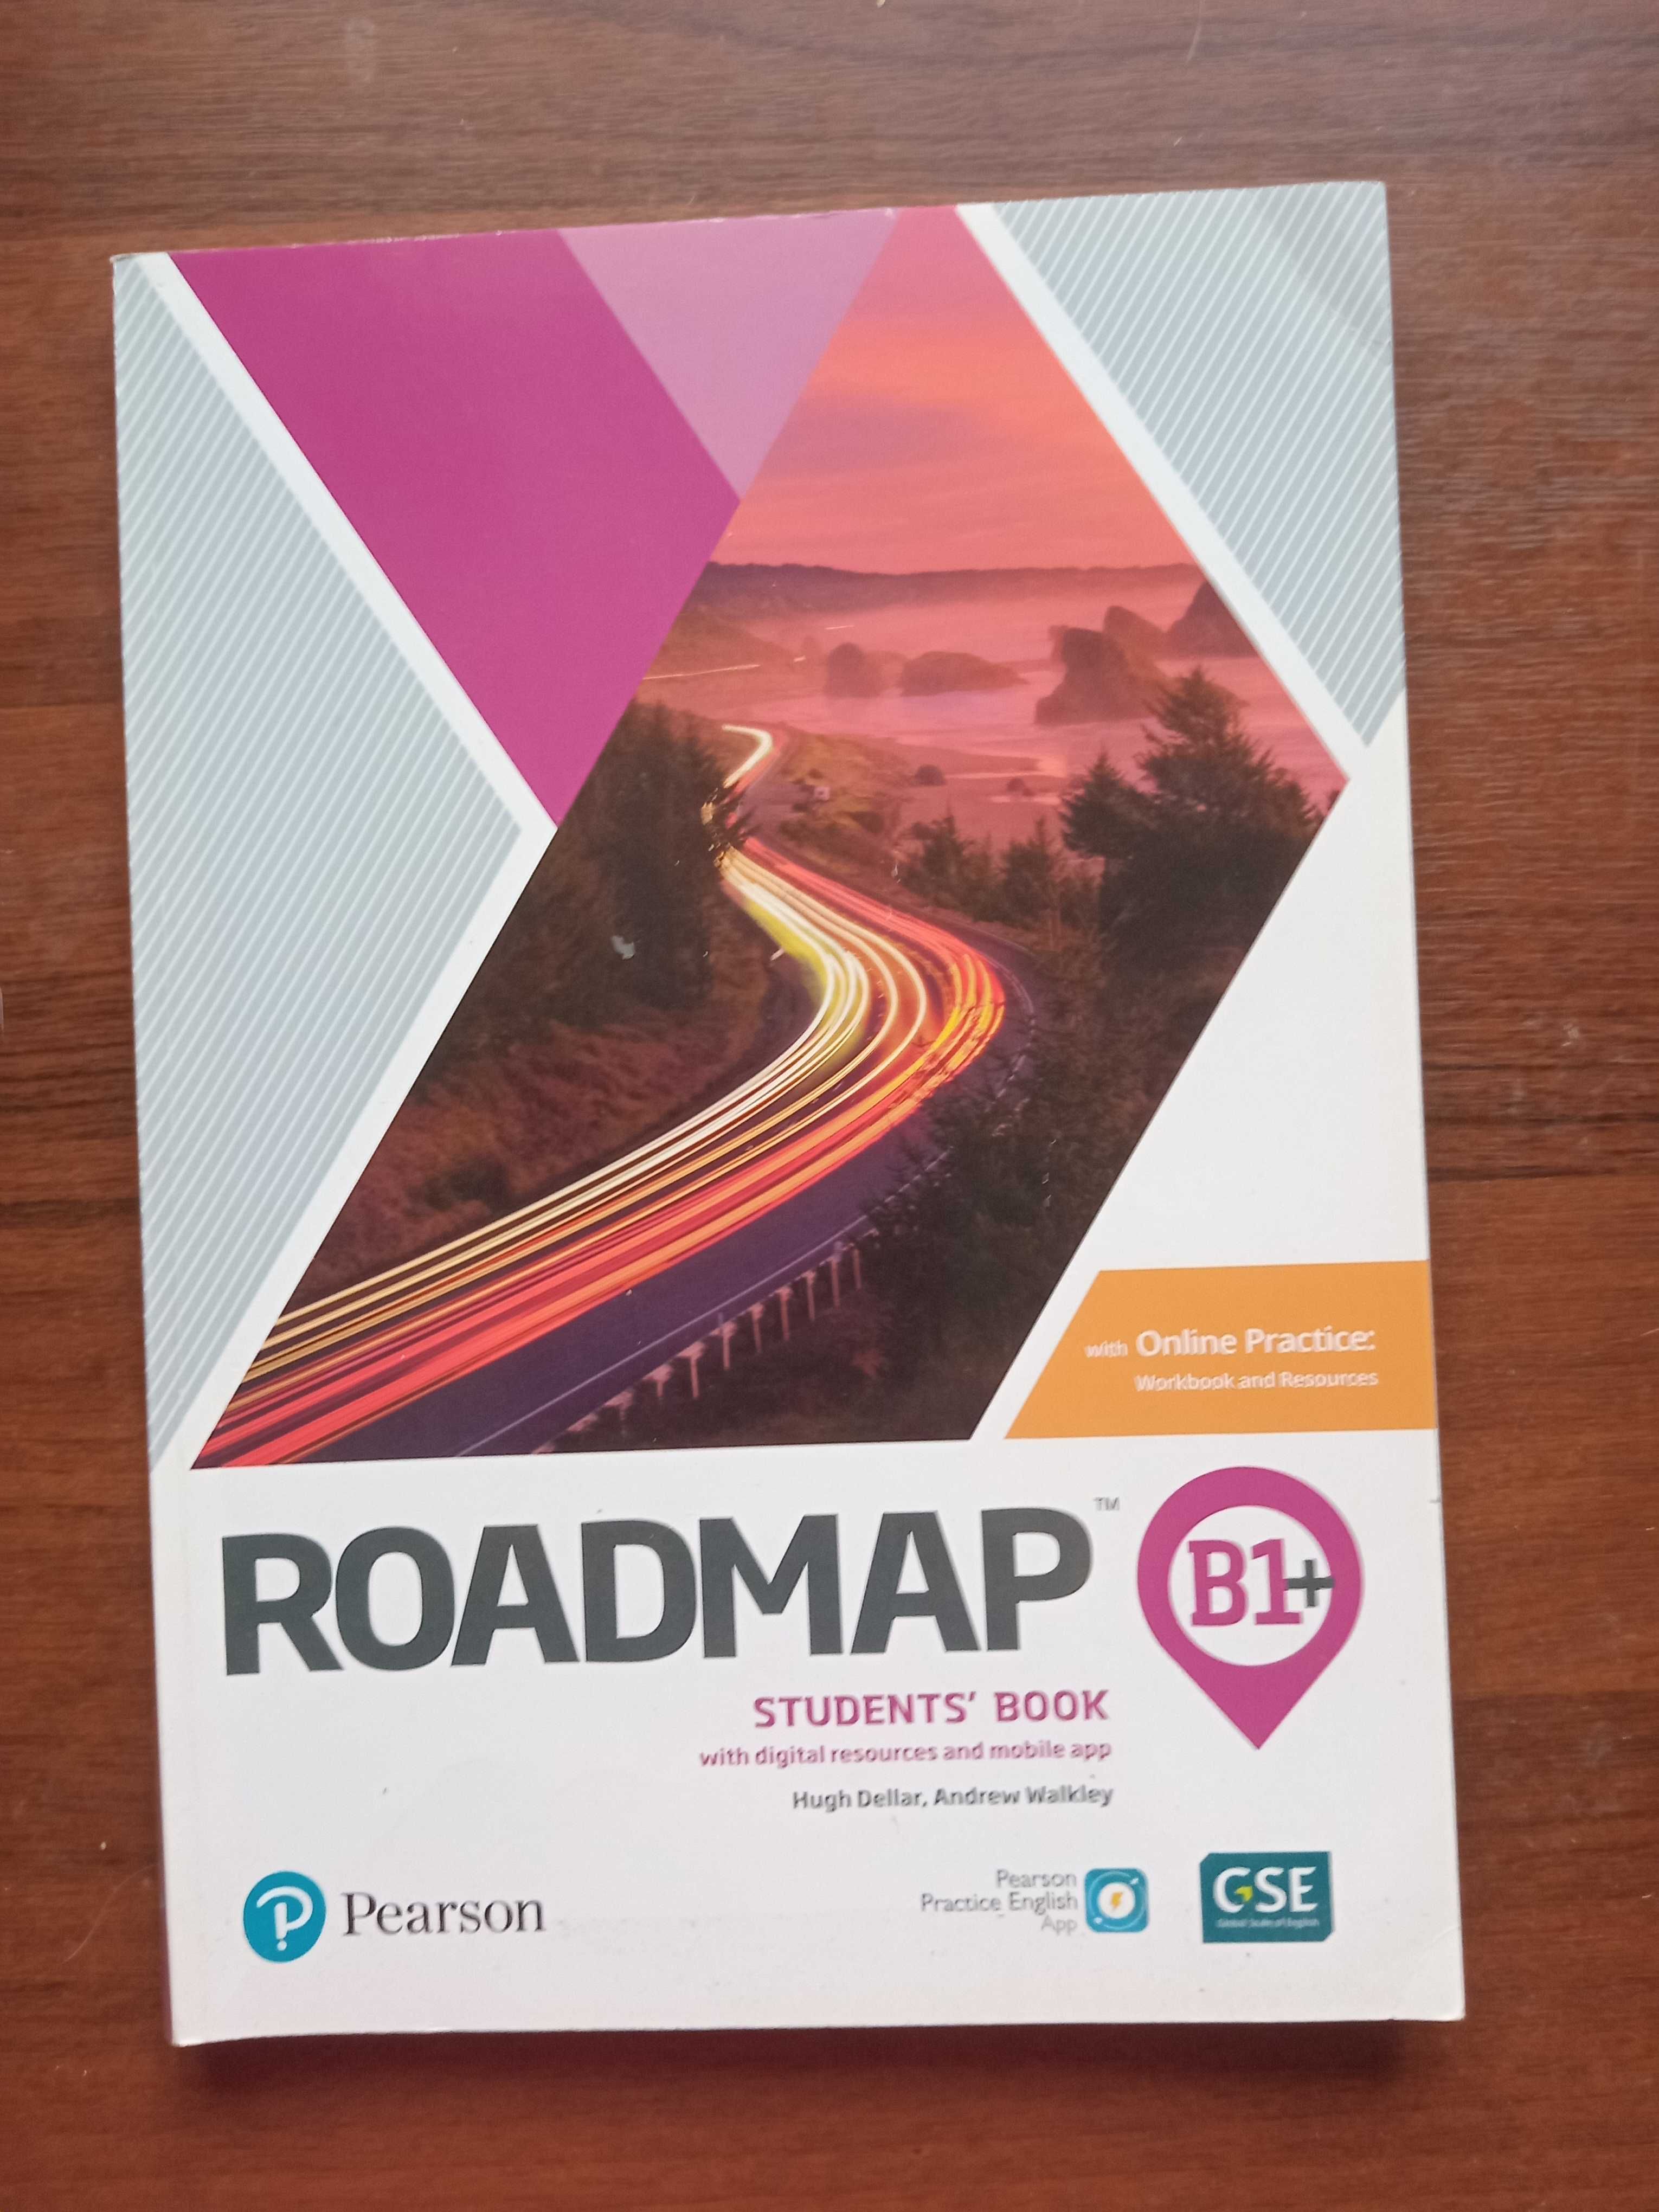 Roadmap B1+ Student's Book (with online practice: workbook+resources)